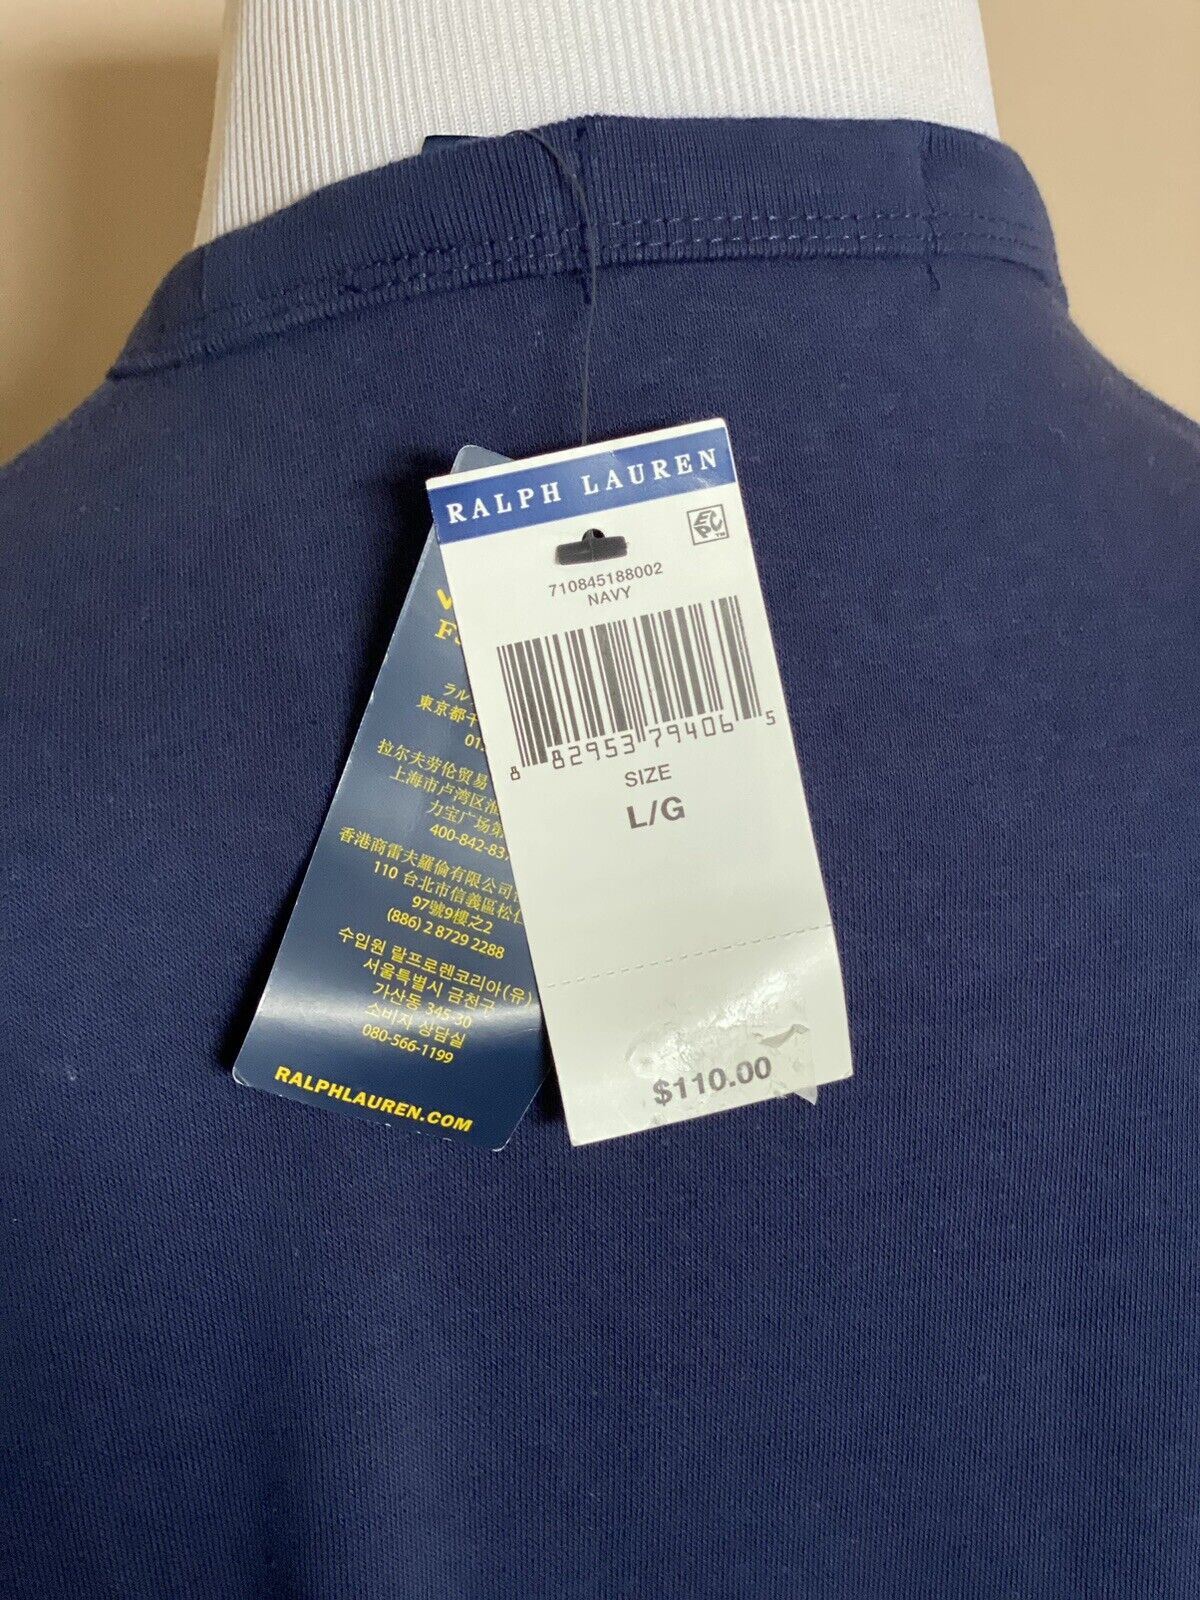 NWT $110 Polo Ralph Lauren  Polo Logo Fleece Sweatshirt Navy L/G